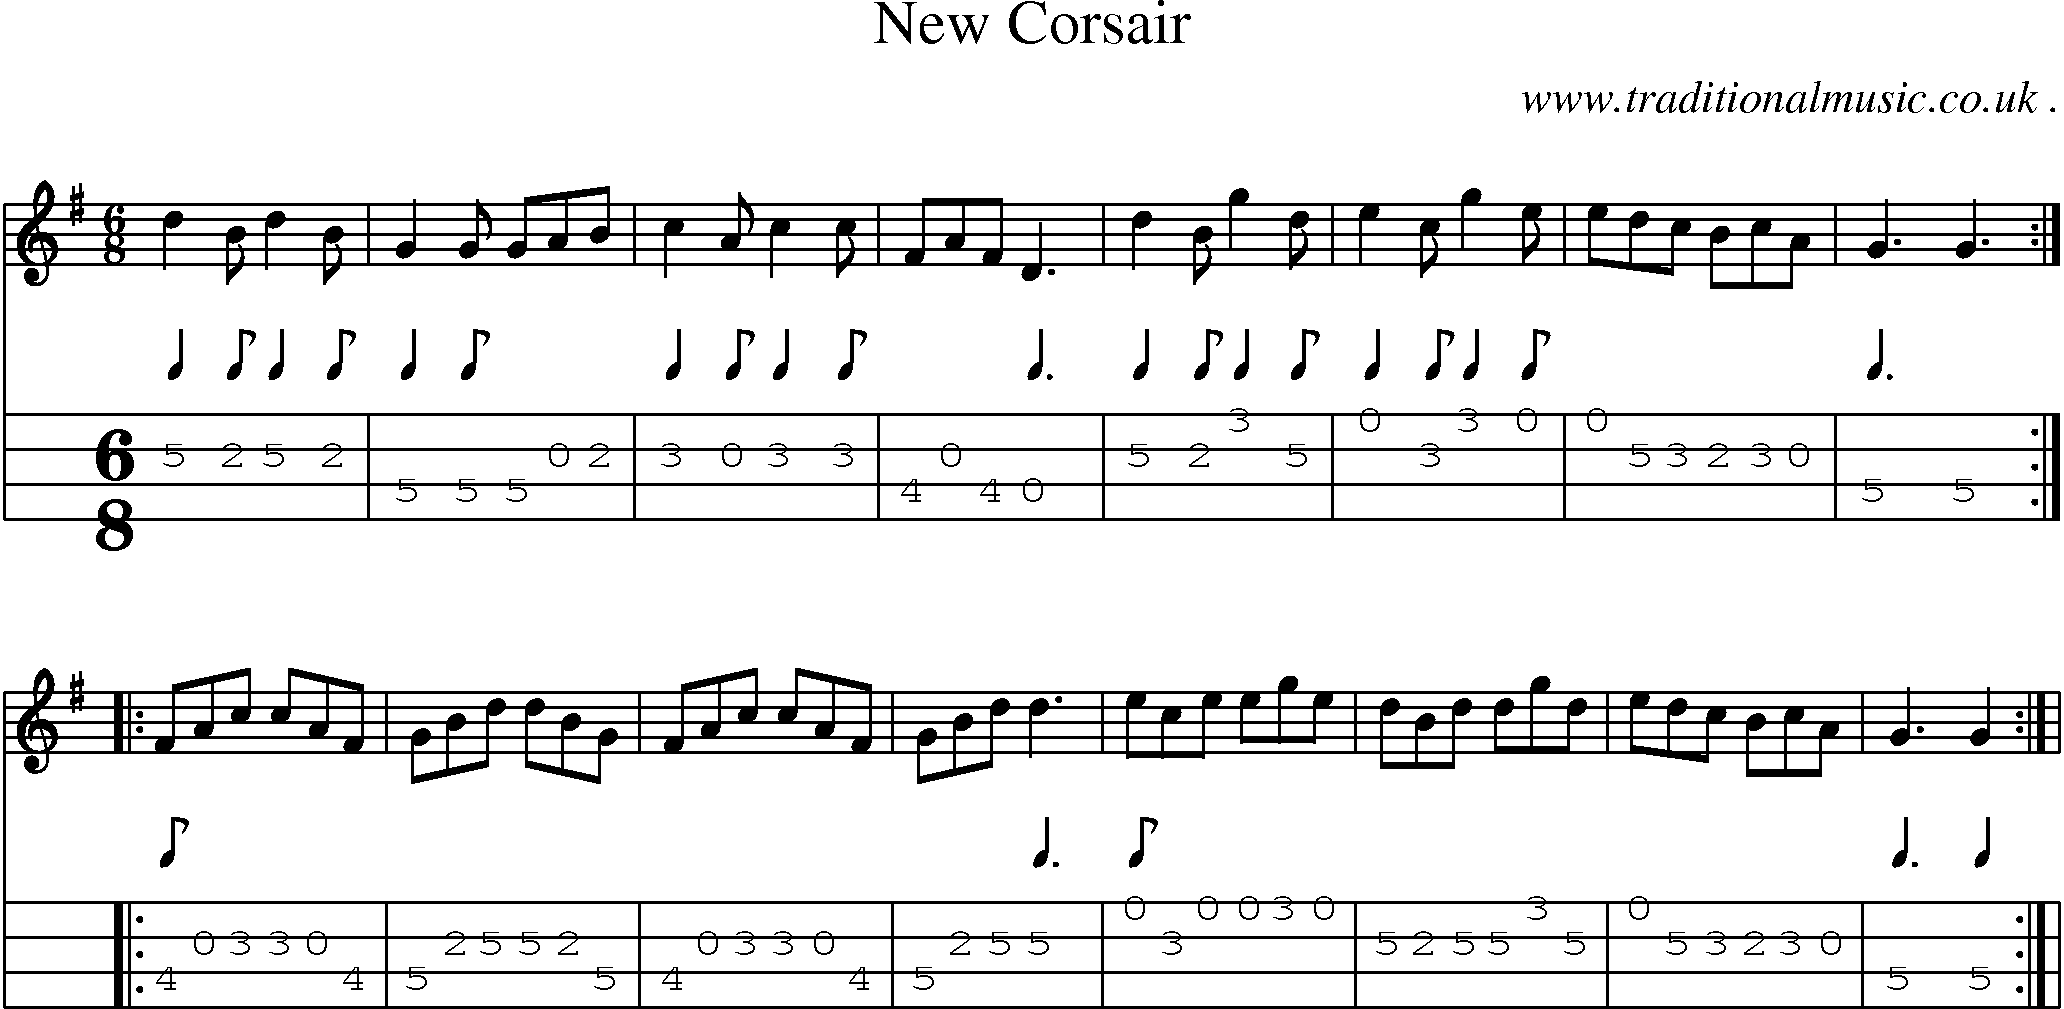 Sheet-Music and Mandolin Tabs for New Corsair